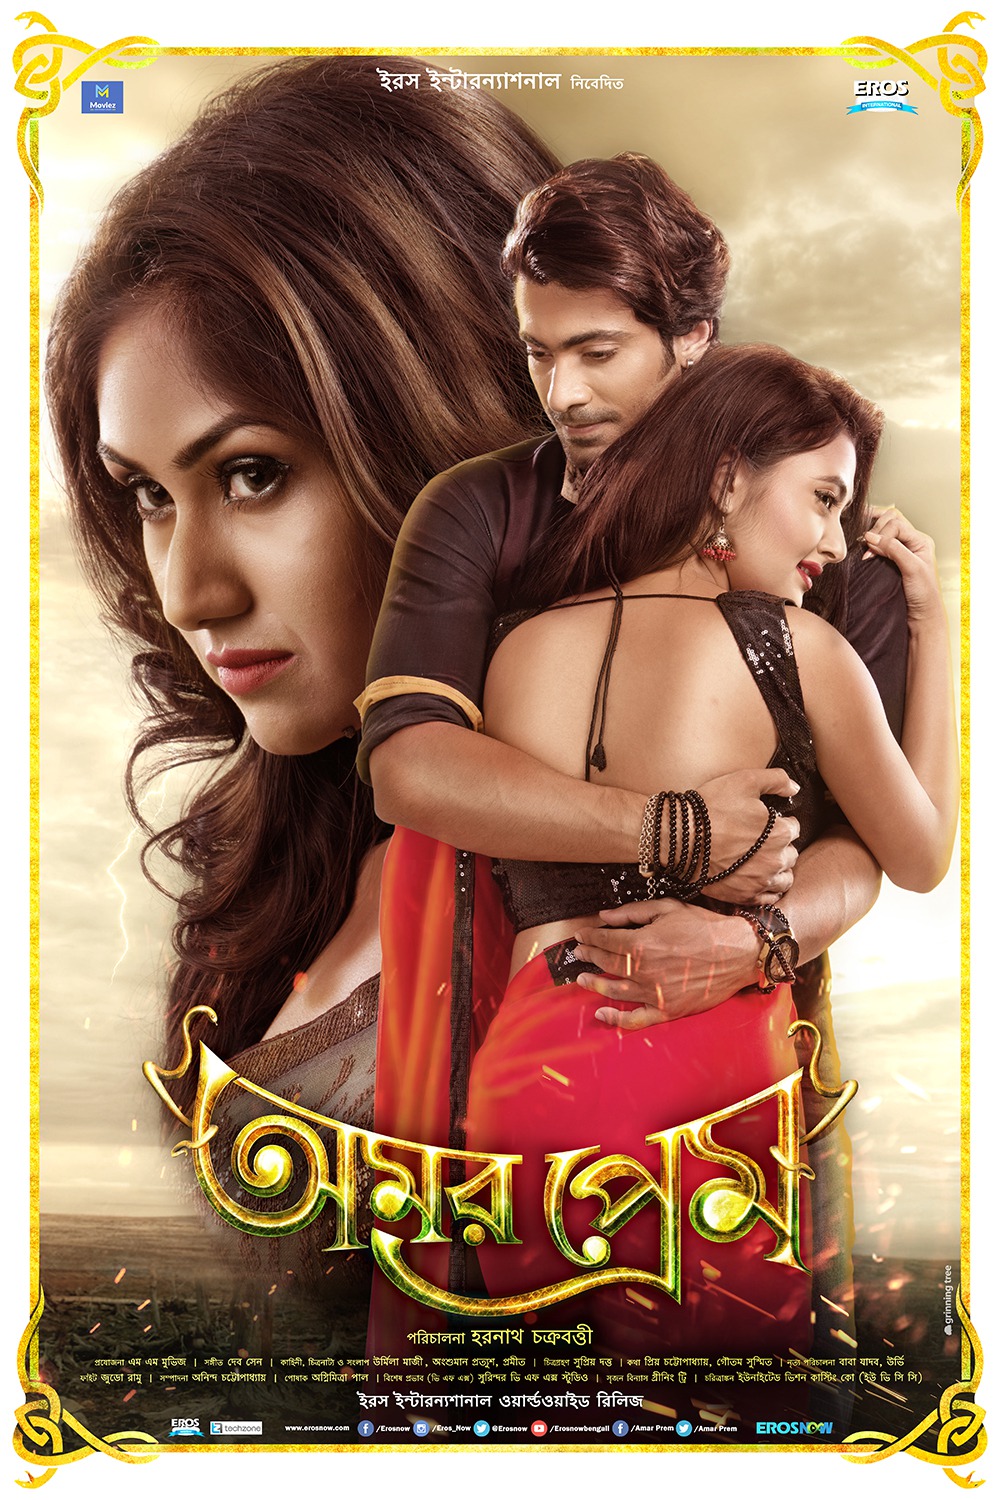 Extra Large Movie Poster Image for Amar Prem (#2 of 9)